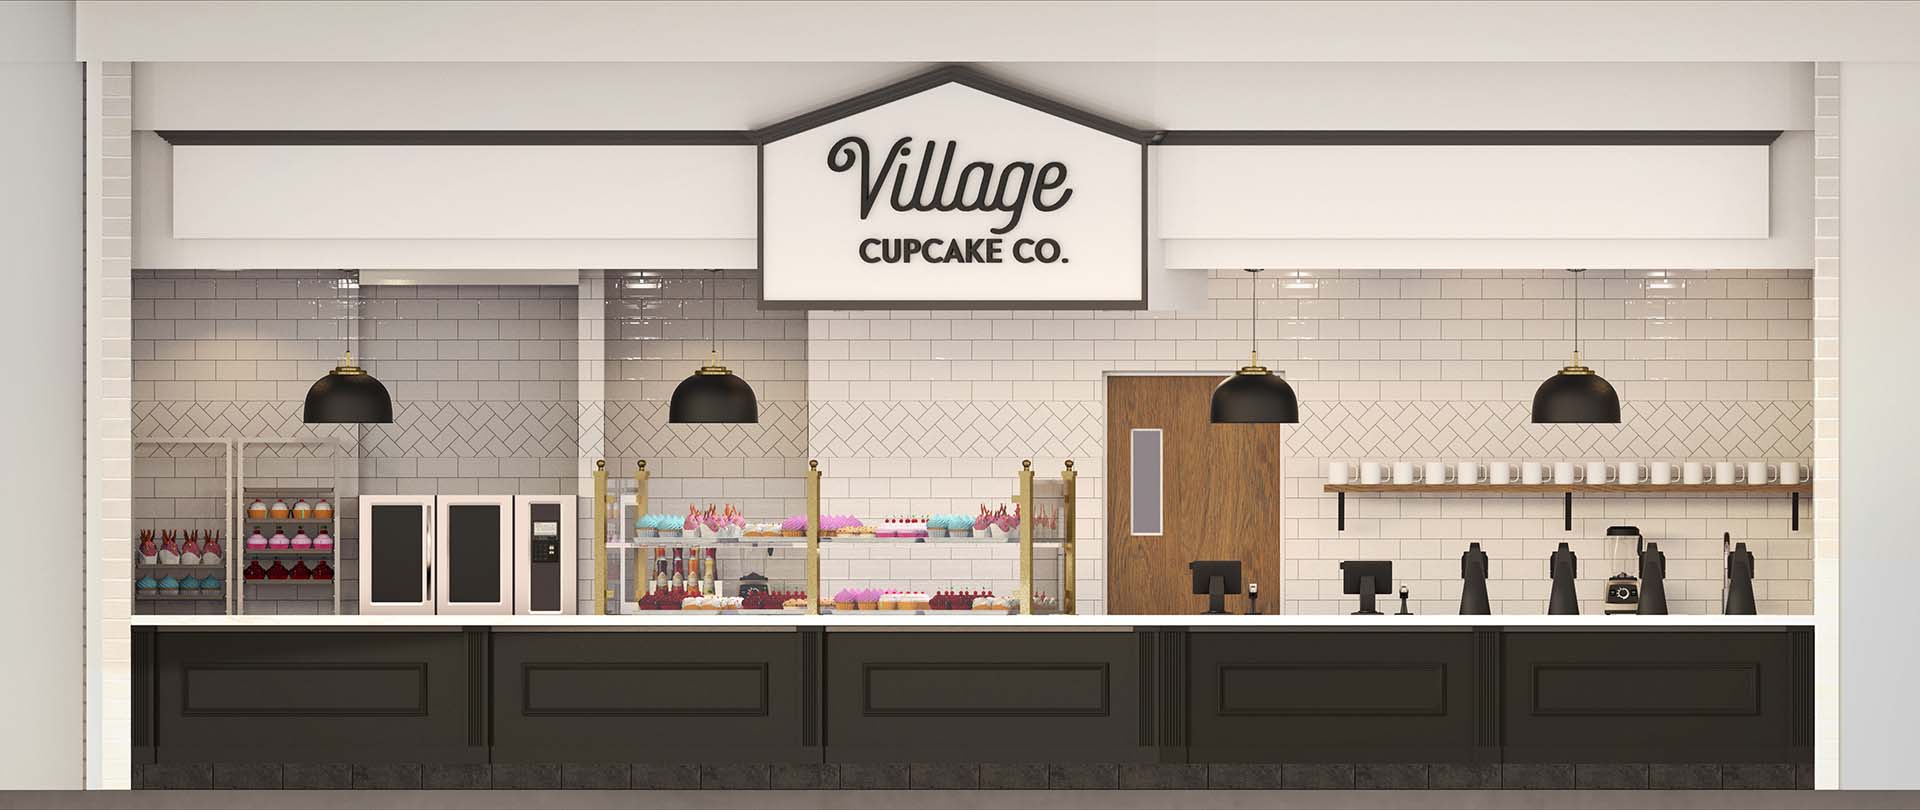 Village Cupcake Company - Commercial - Commercial 4499-VillageCupcakeCompany-dv2-02b-1920.jpg